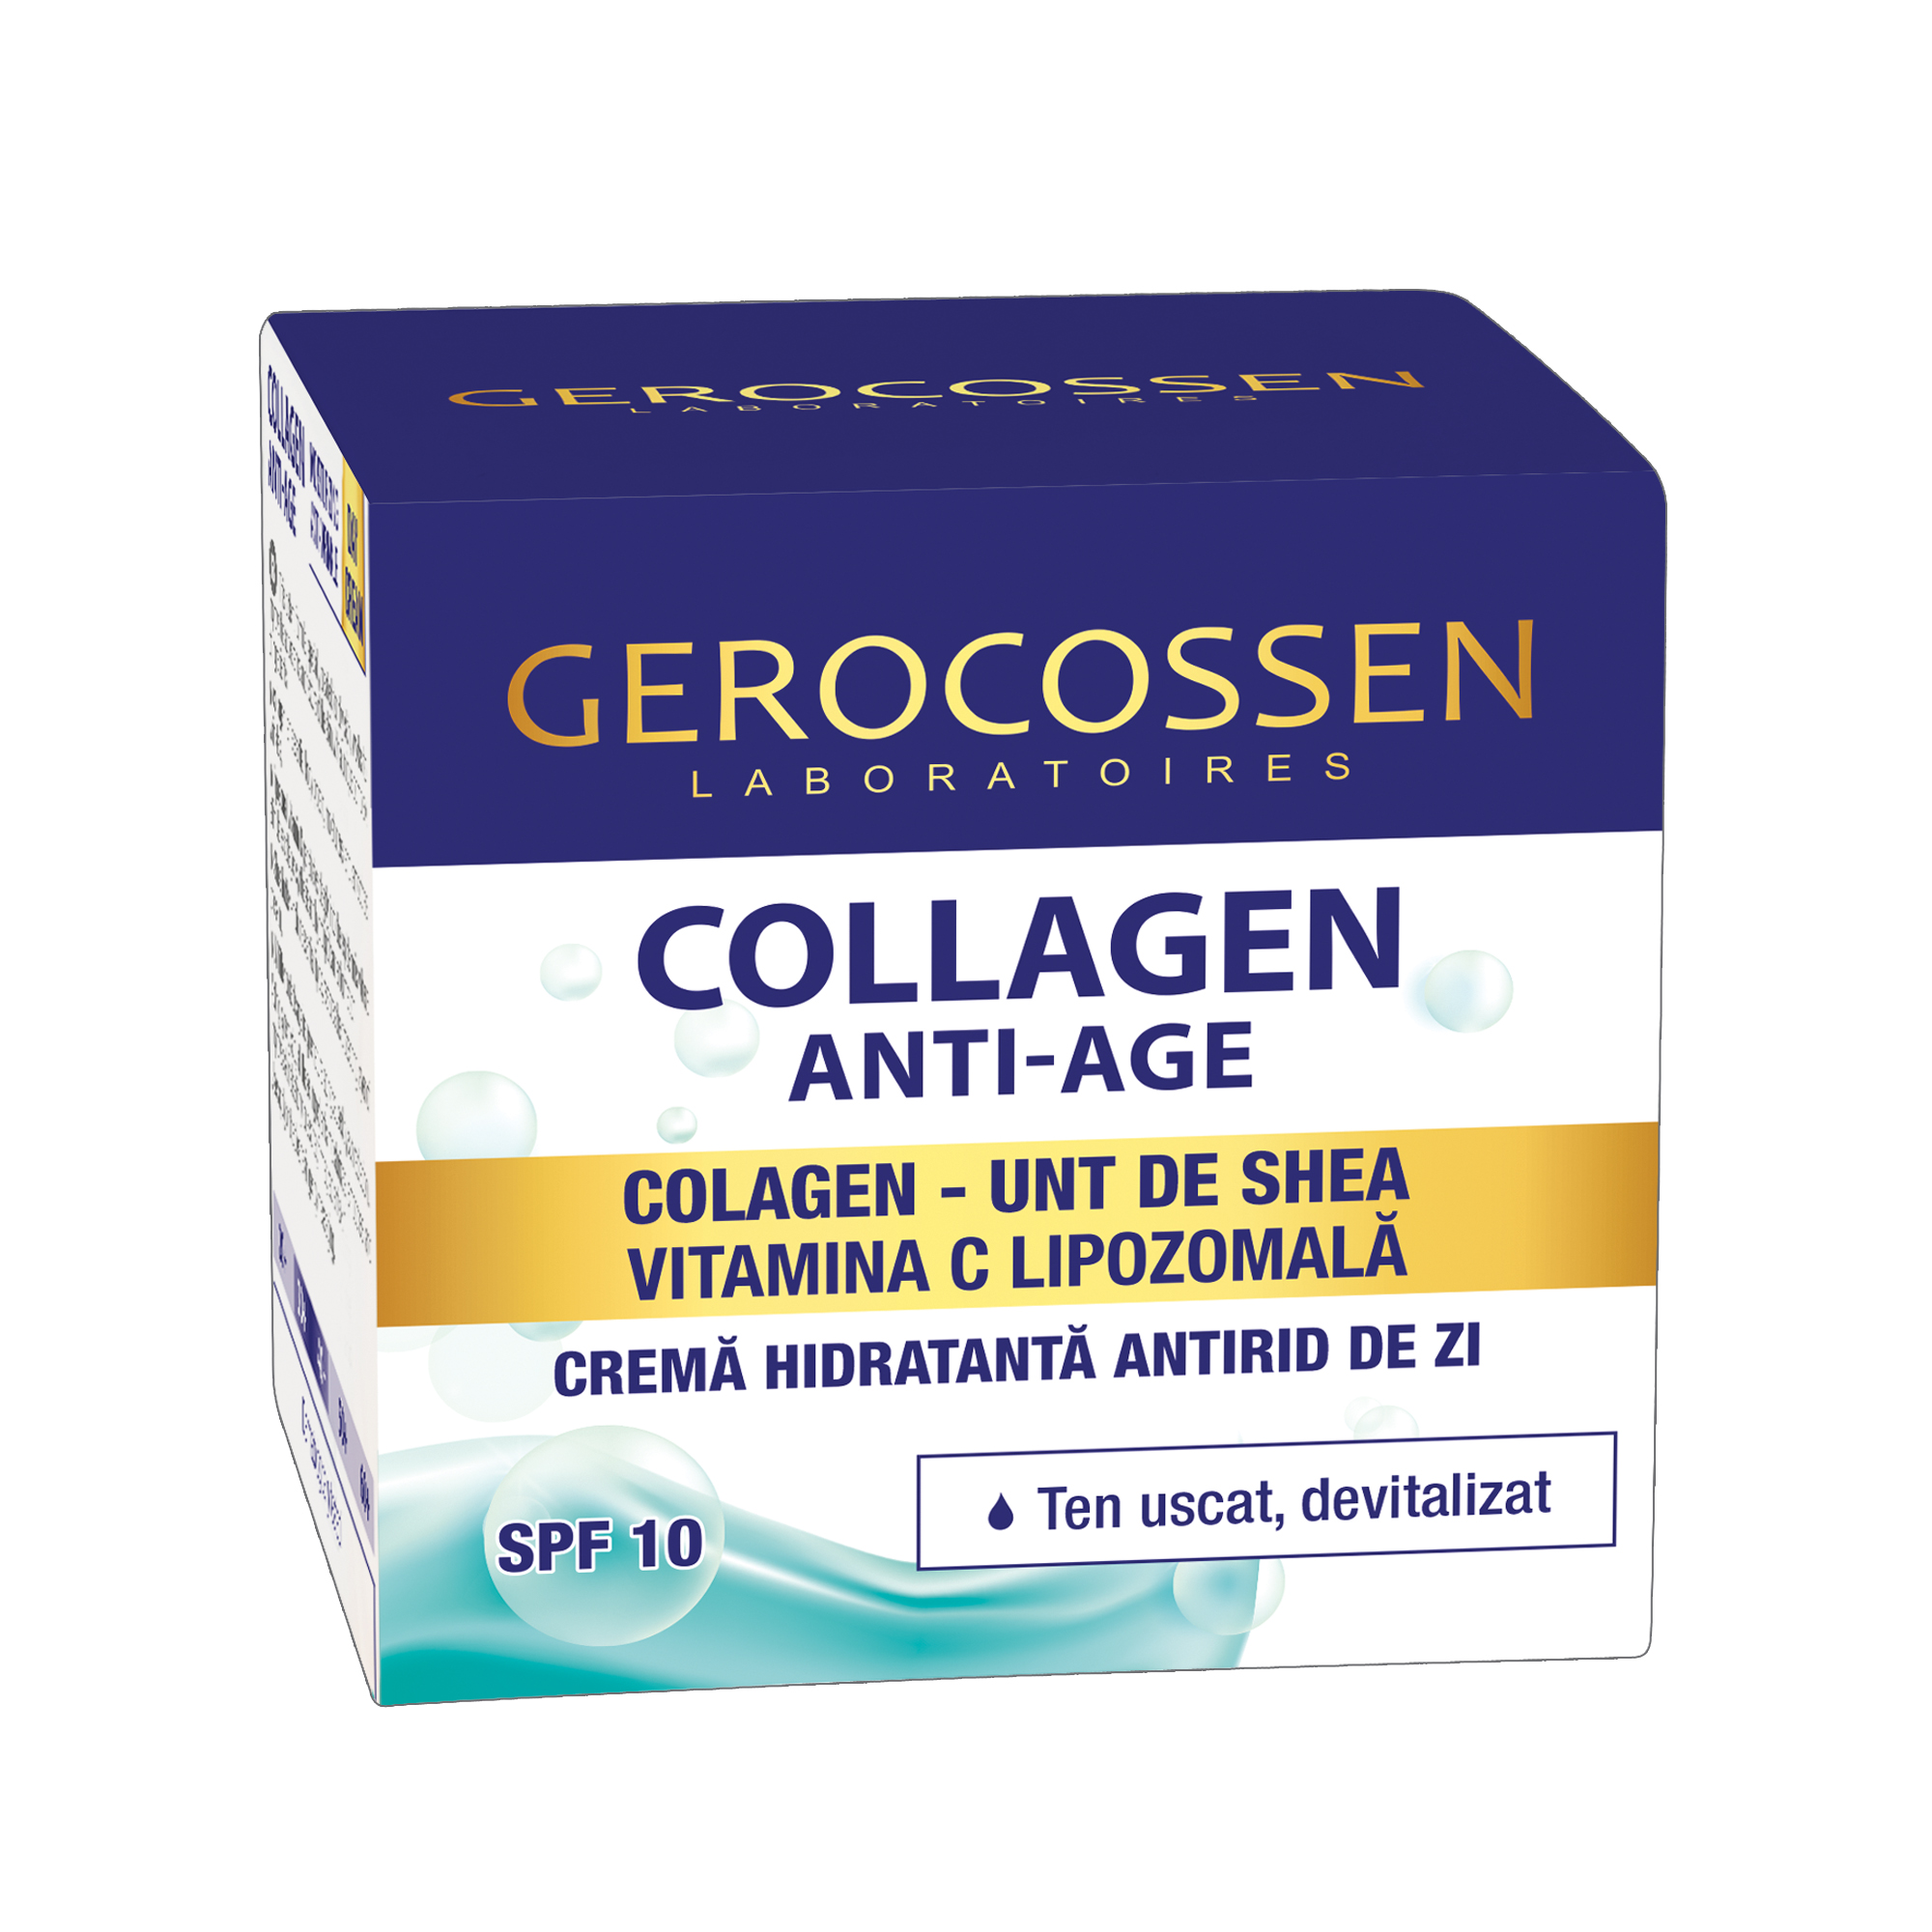 Crema hidratanta antirid de zi SPF 10, Collagen Anti-Age, 50 ml, Gerocossen